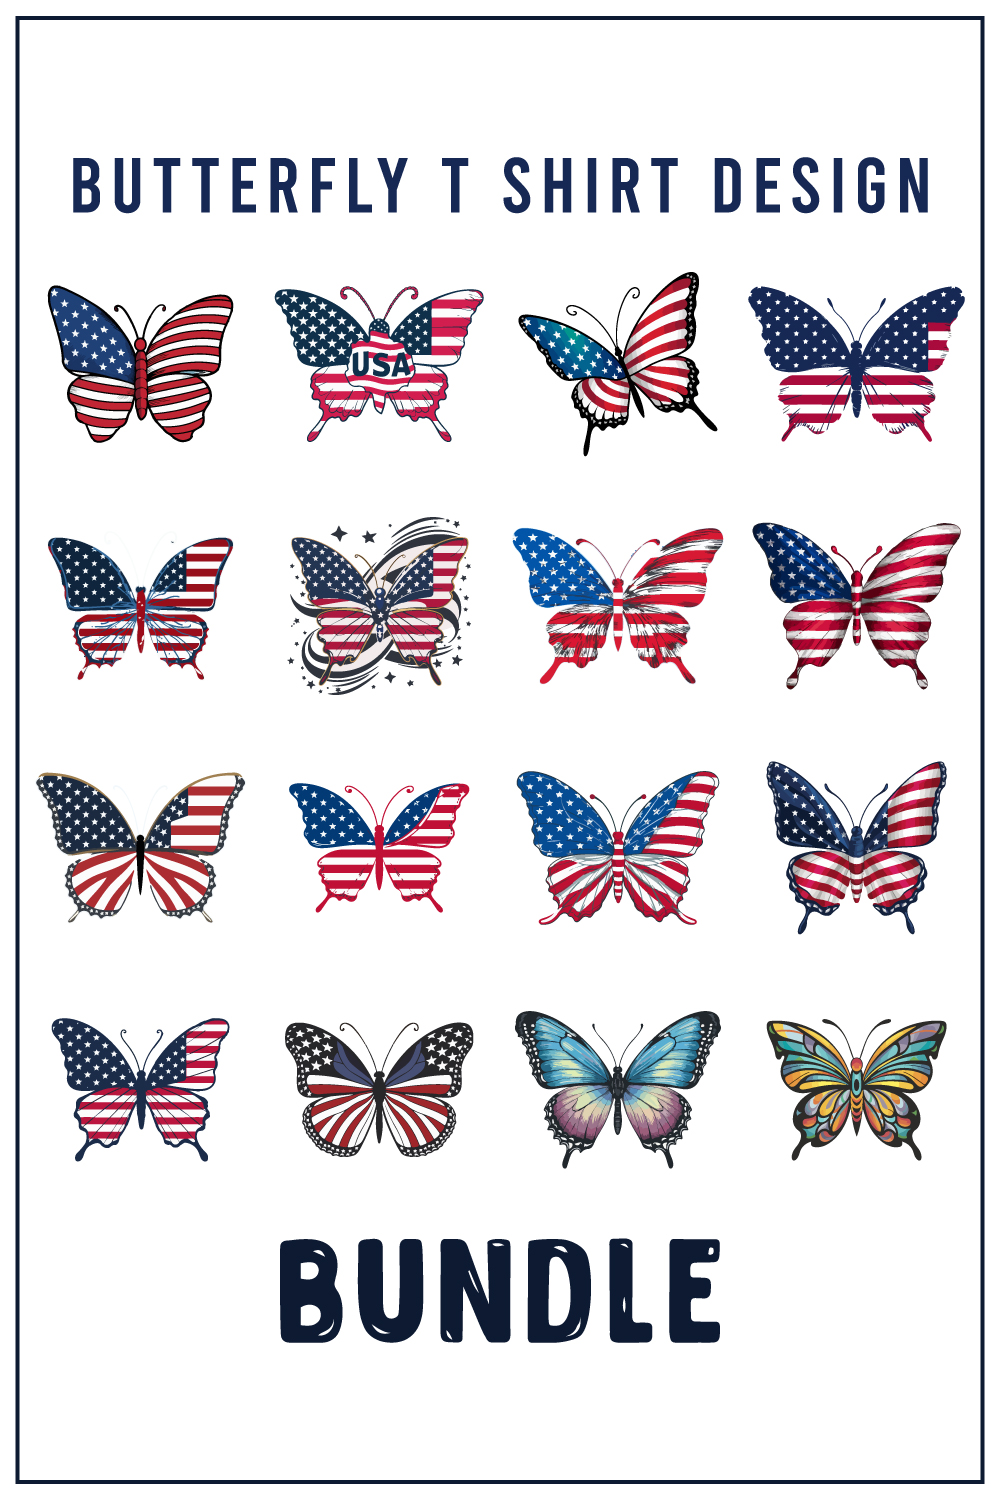 Butterfly T Shirt Design Bundle, American Flag pinterest preview image.